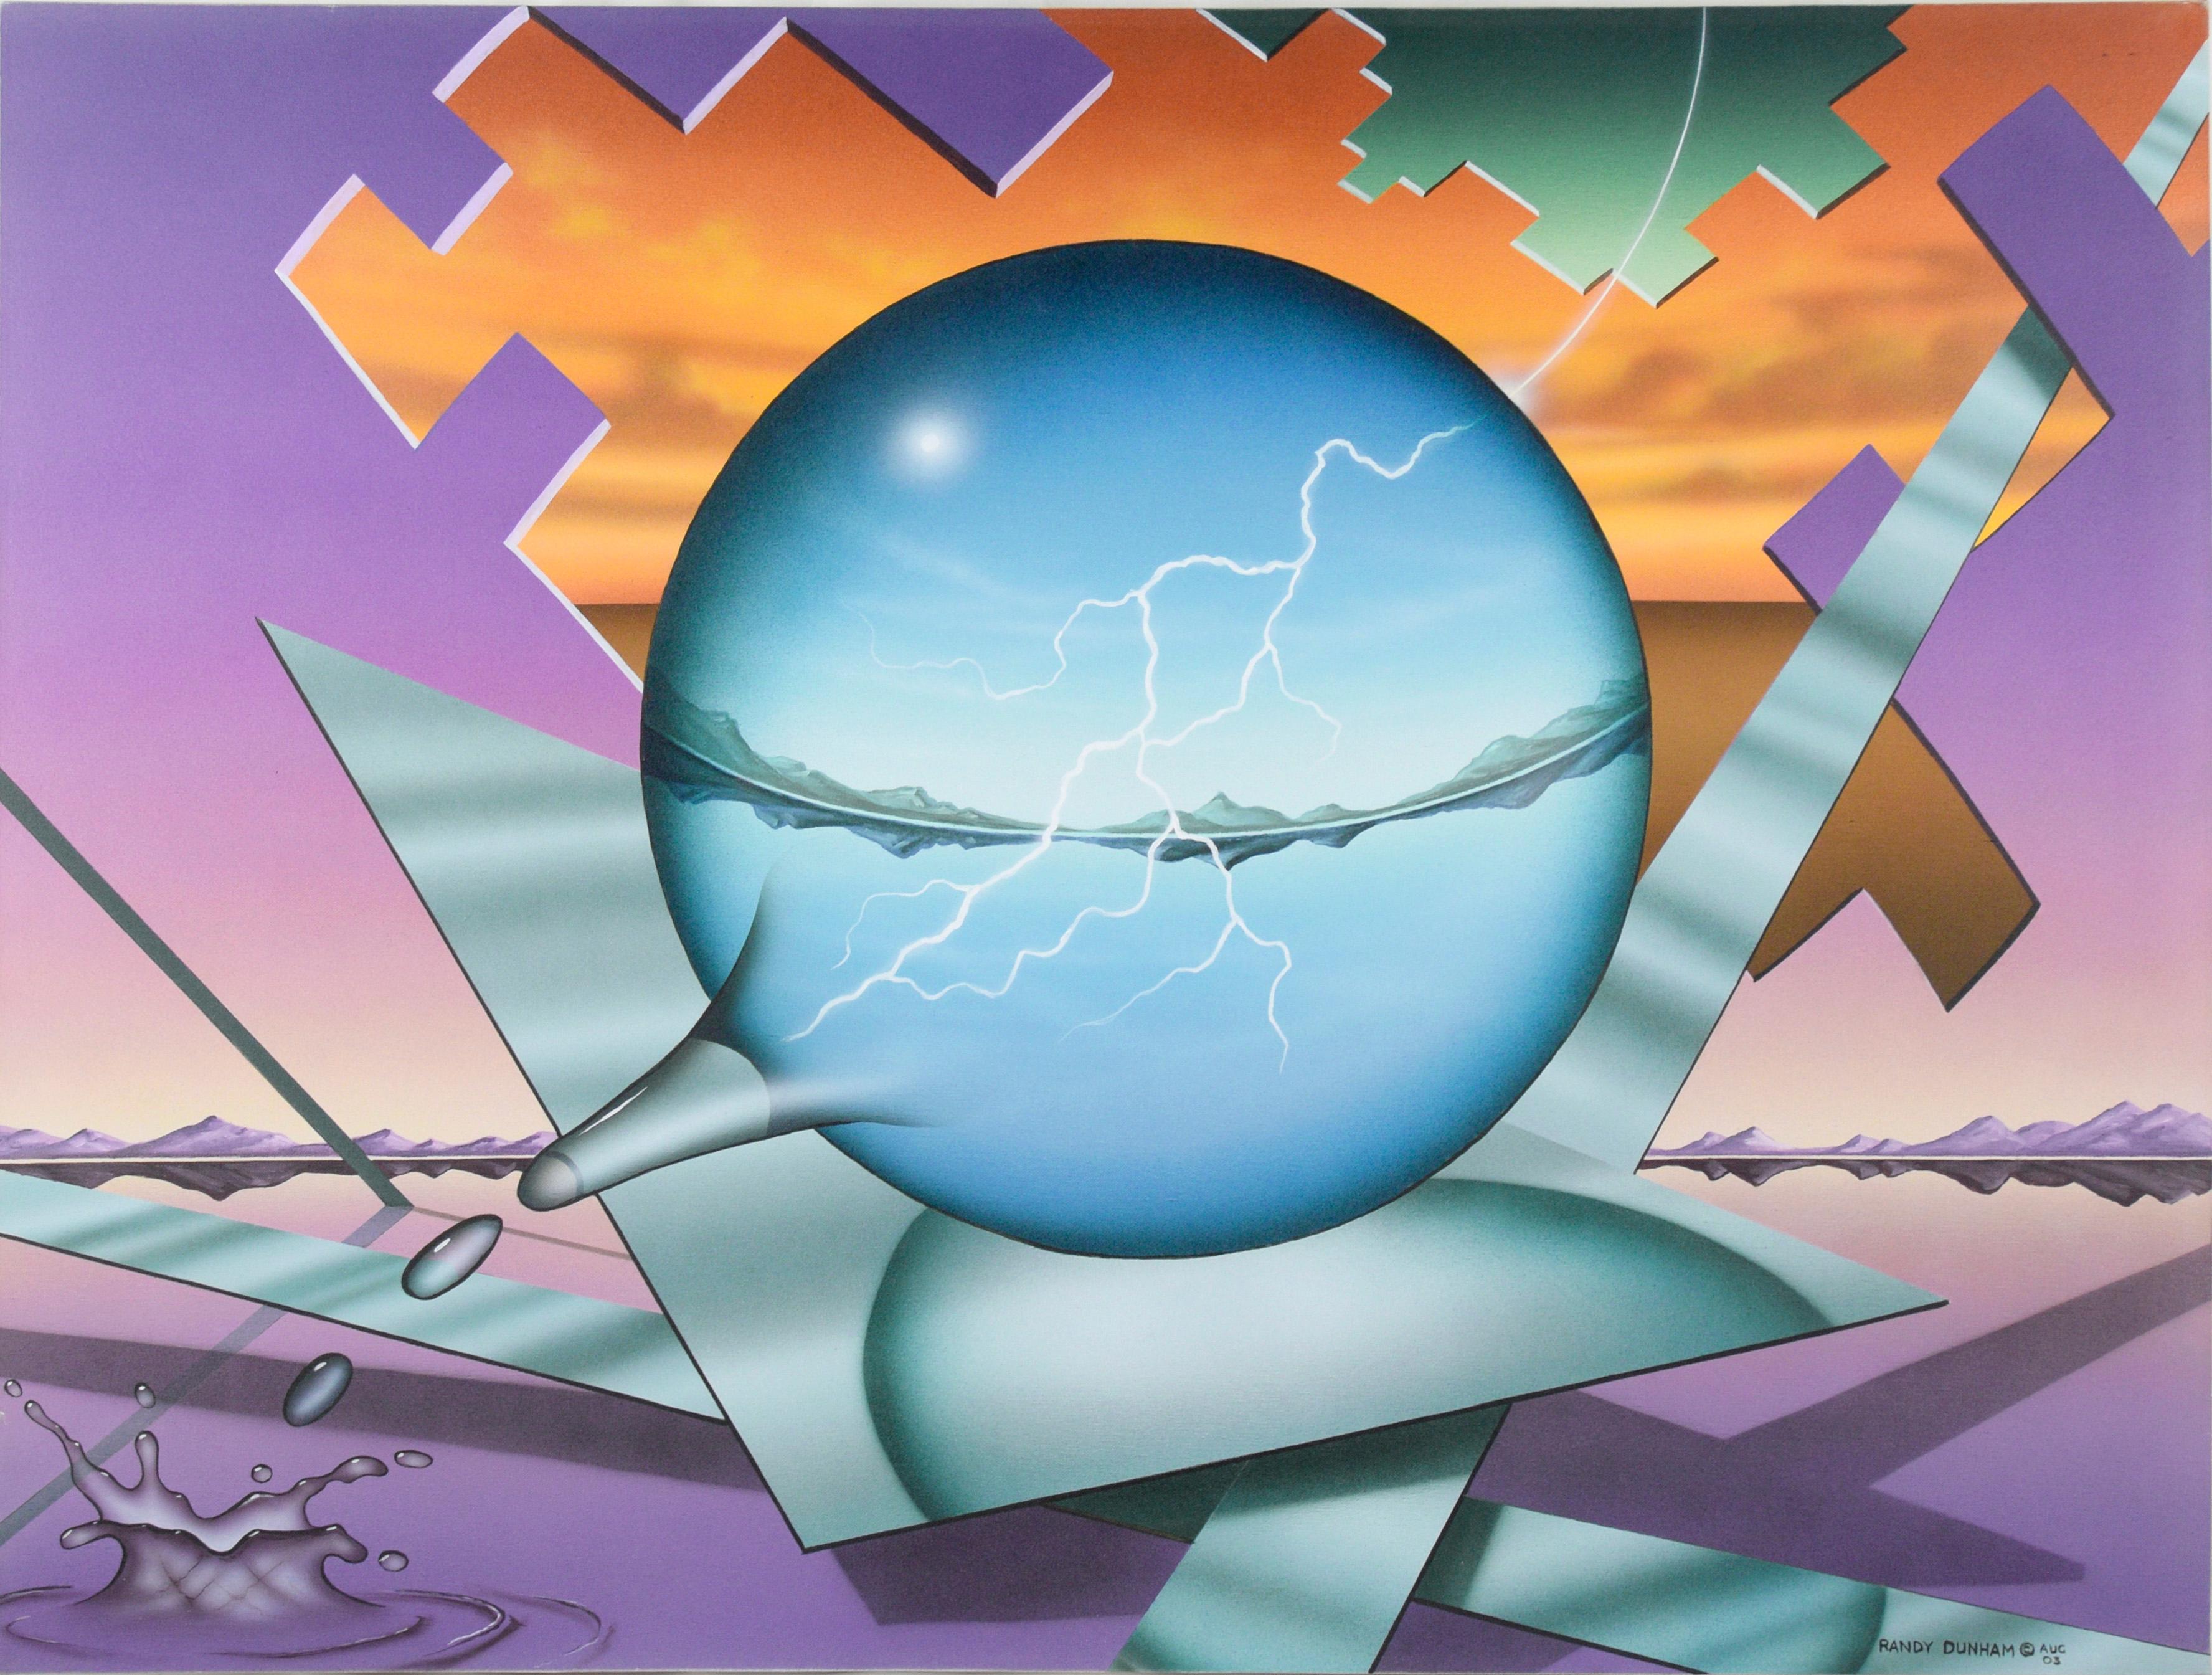 "Striking" Natures Balance - Geometric Surrealist Landscape in Acrylic on Canvas